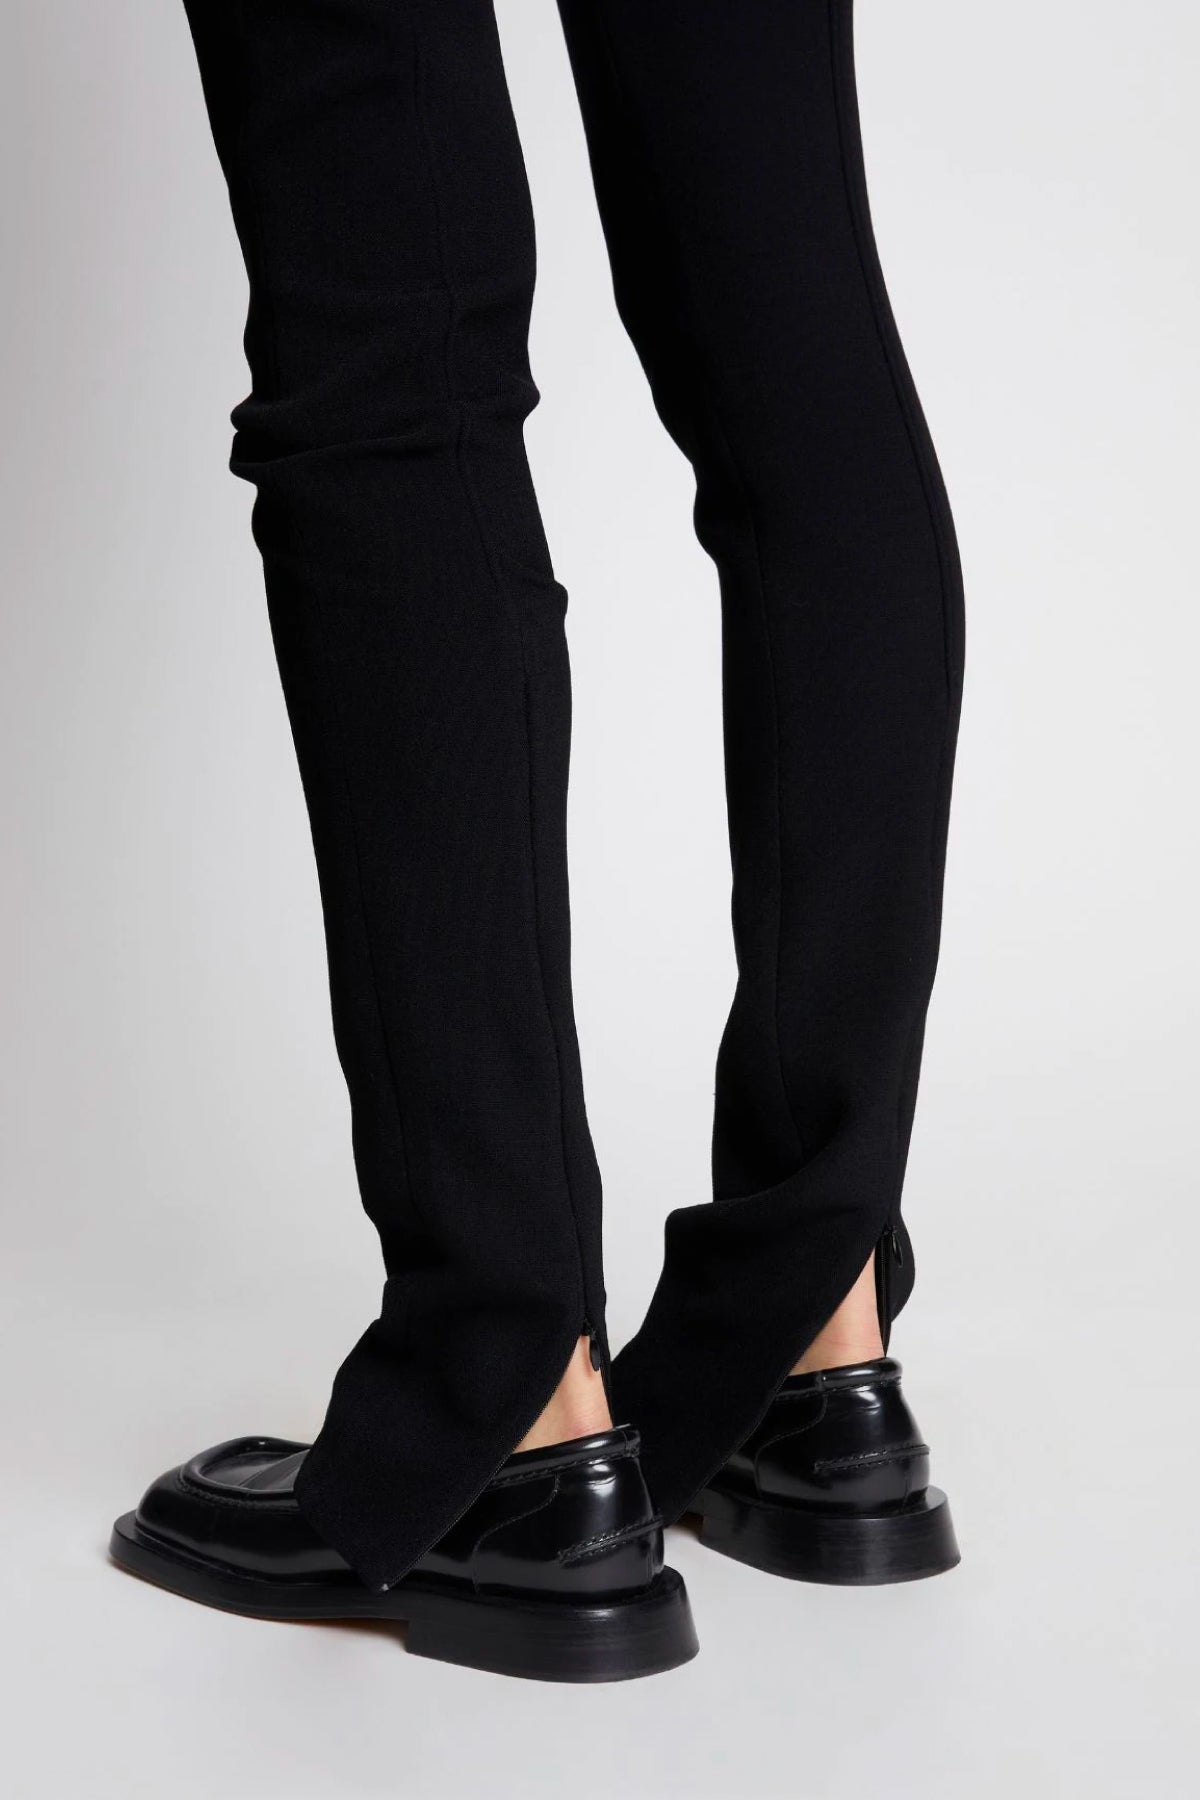 Proenza Schouler Bi-Stretch Crepe Slim Pants - Black